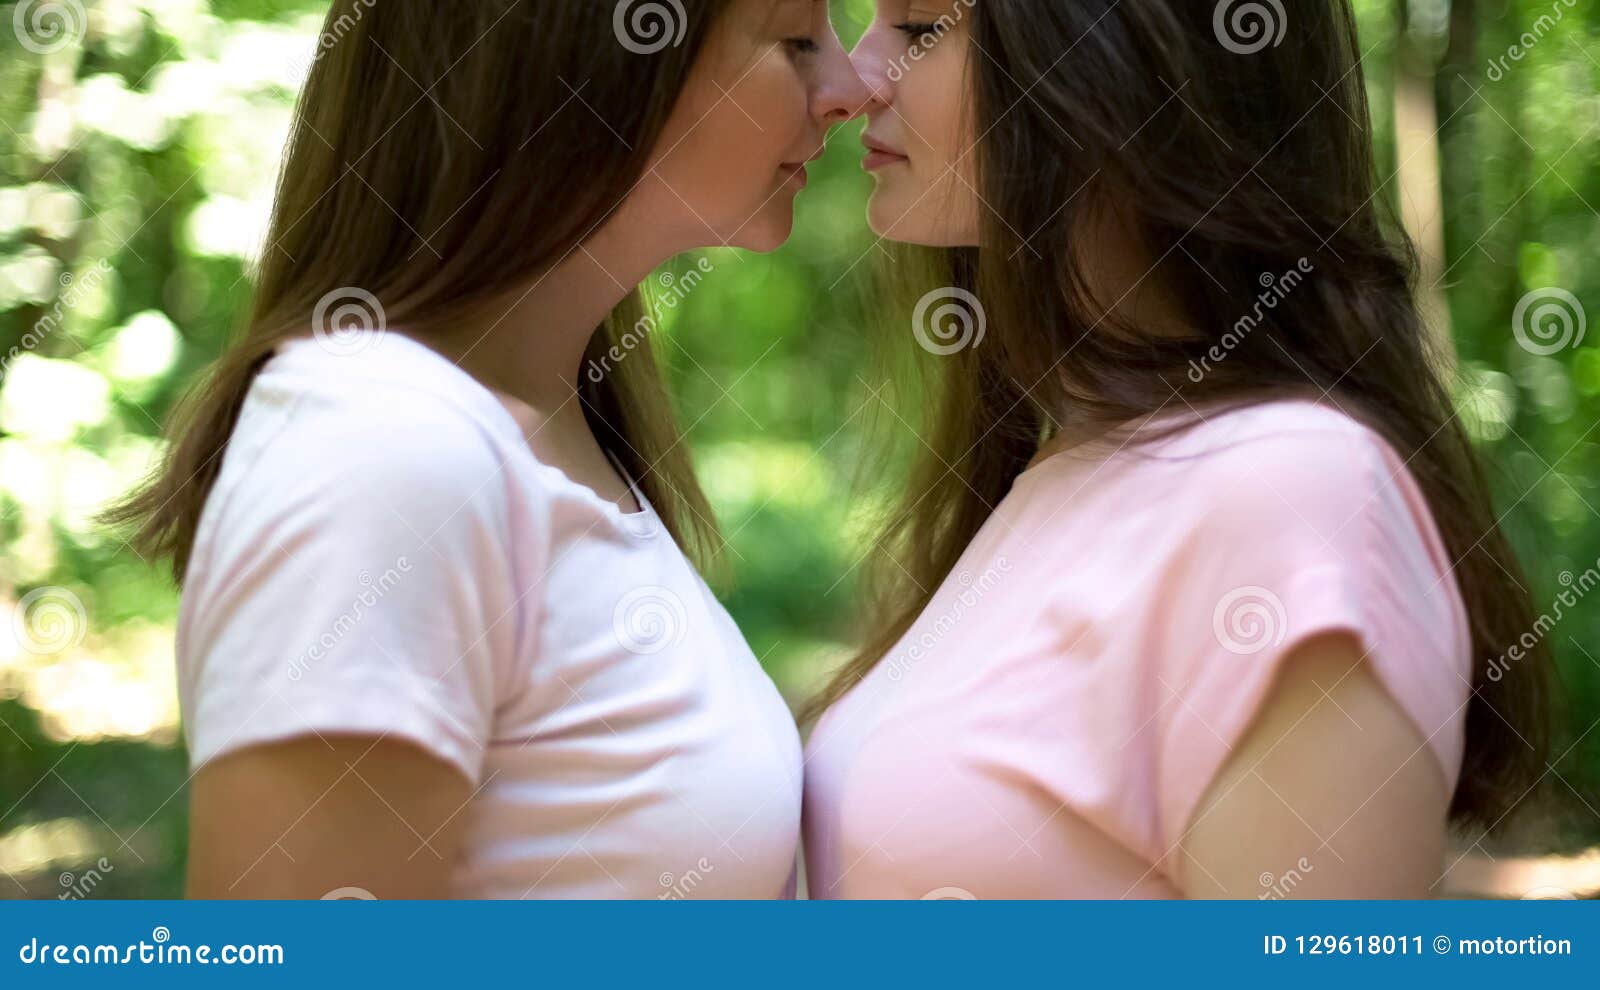 469 Lesbians Kissing Stock Photos image